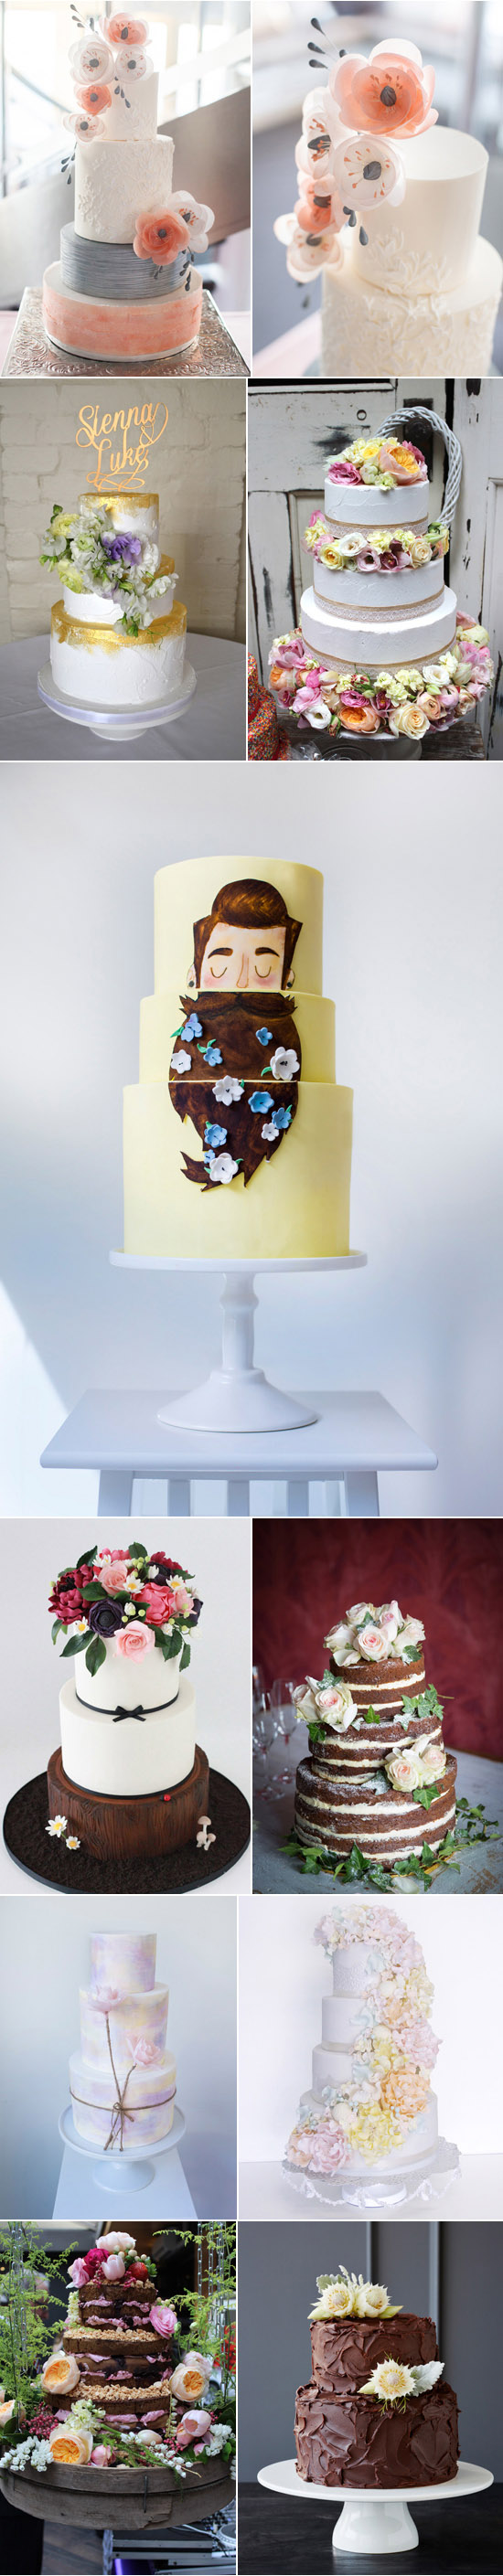 Spring inspired wedding cakes